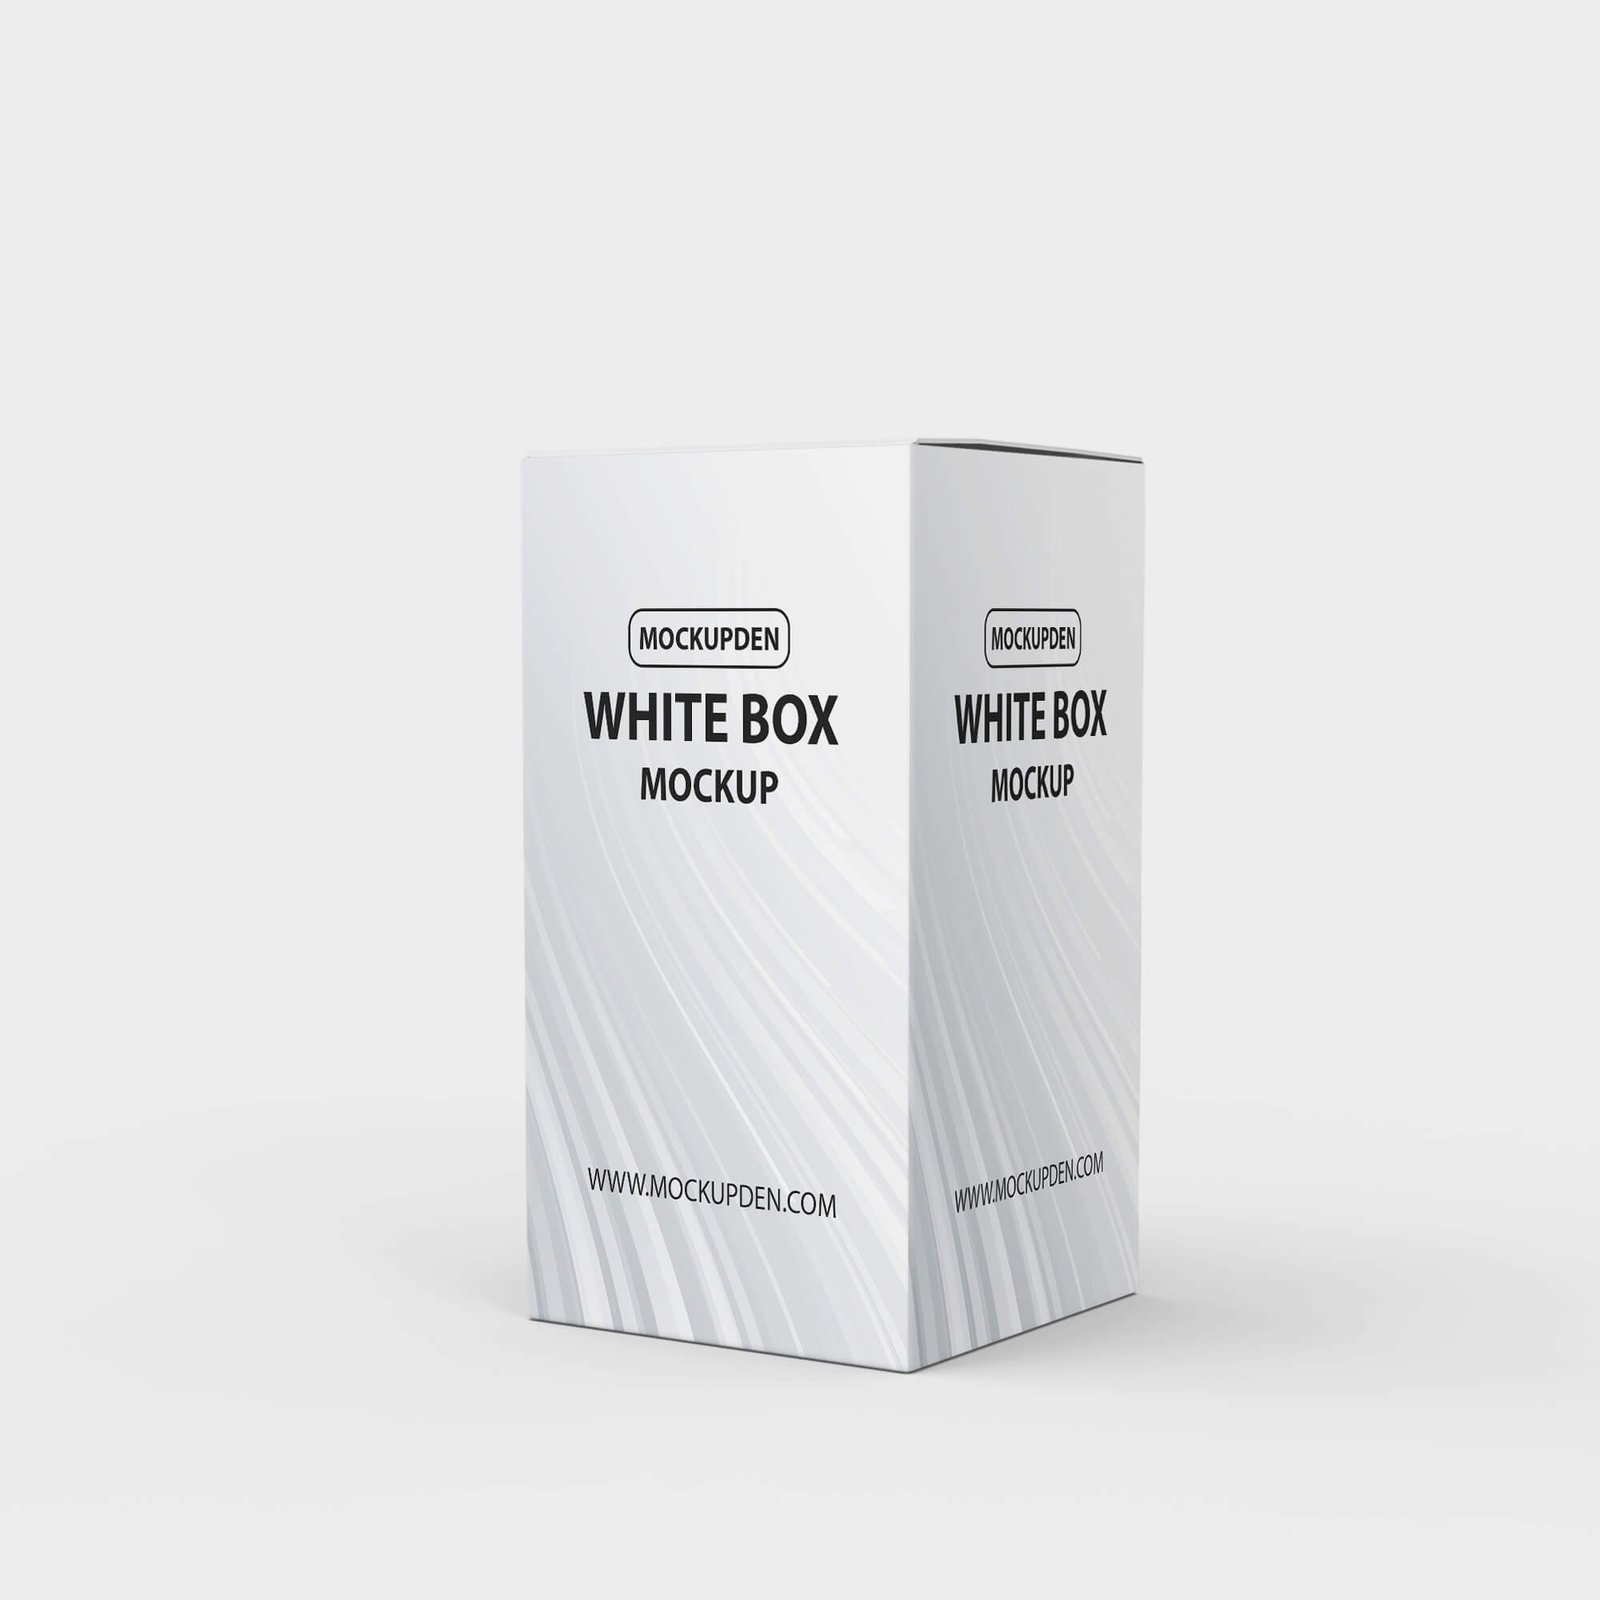 Design Free White Box Mockup PSD Template